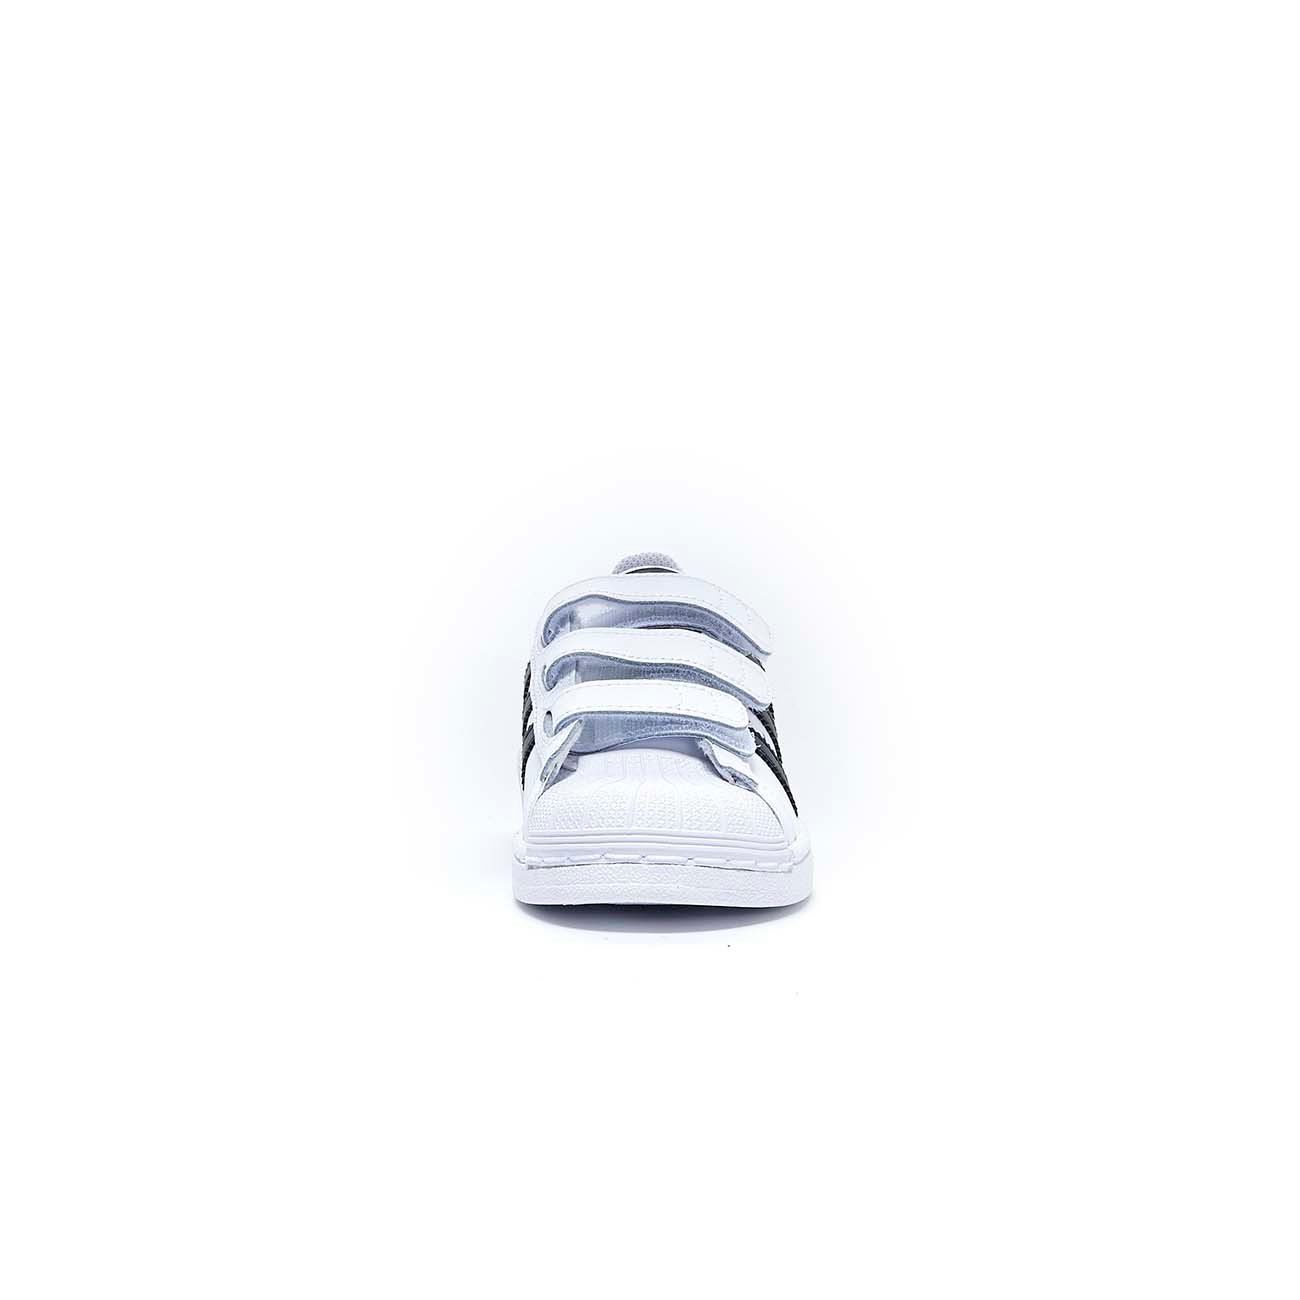 SNEAKER SUPERSTAR FOUNDATION CF C White black white | Mascheroni Sportswear